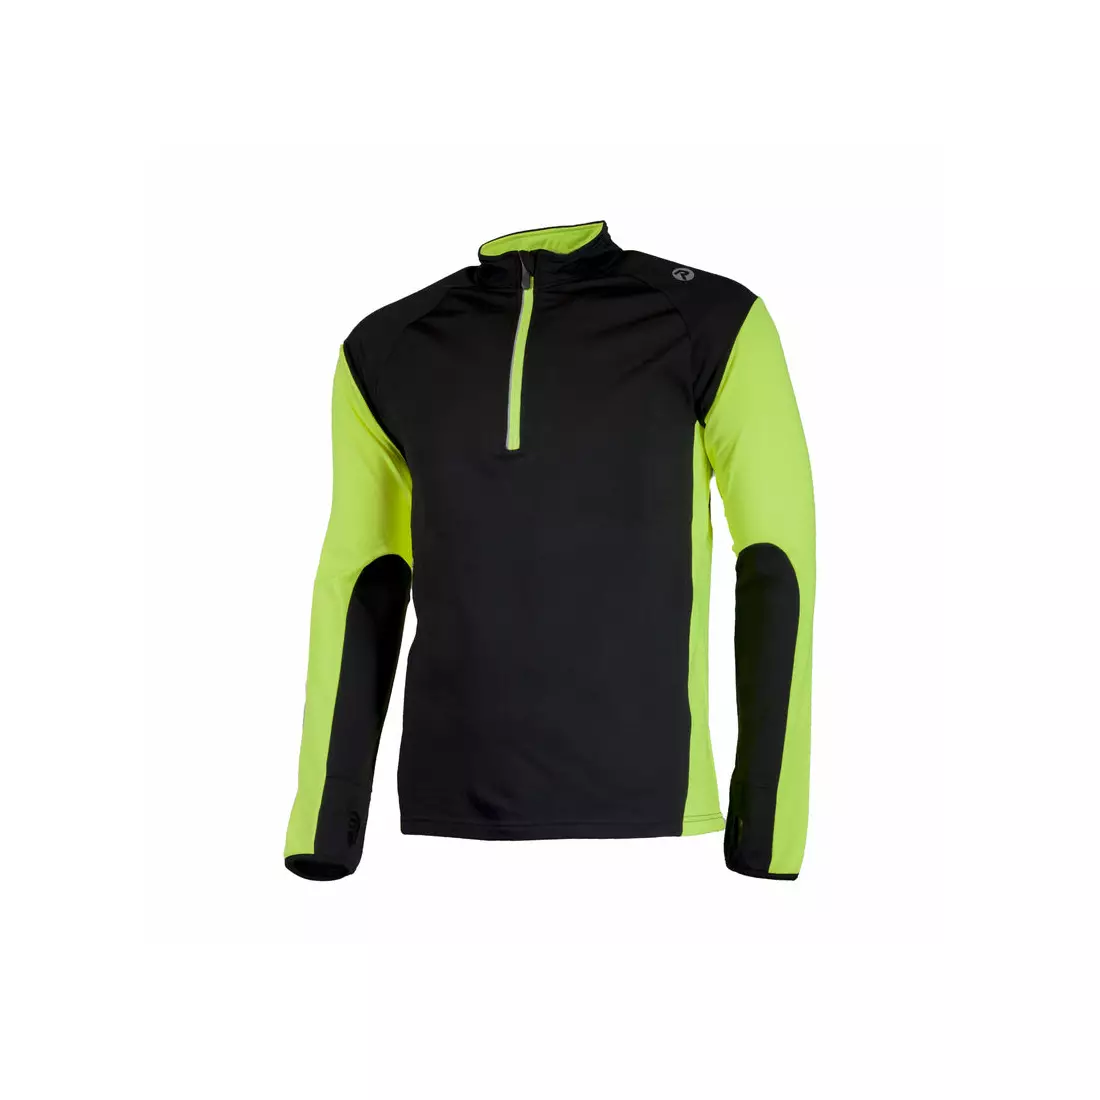 ROGELLI RUN - DILLON - men's lightly insulated running sweatshirt, color: black and fluorine